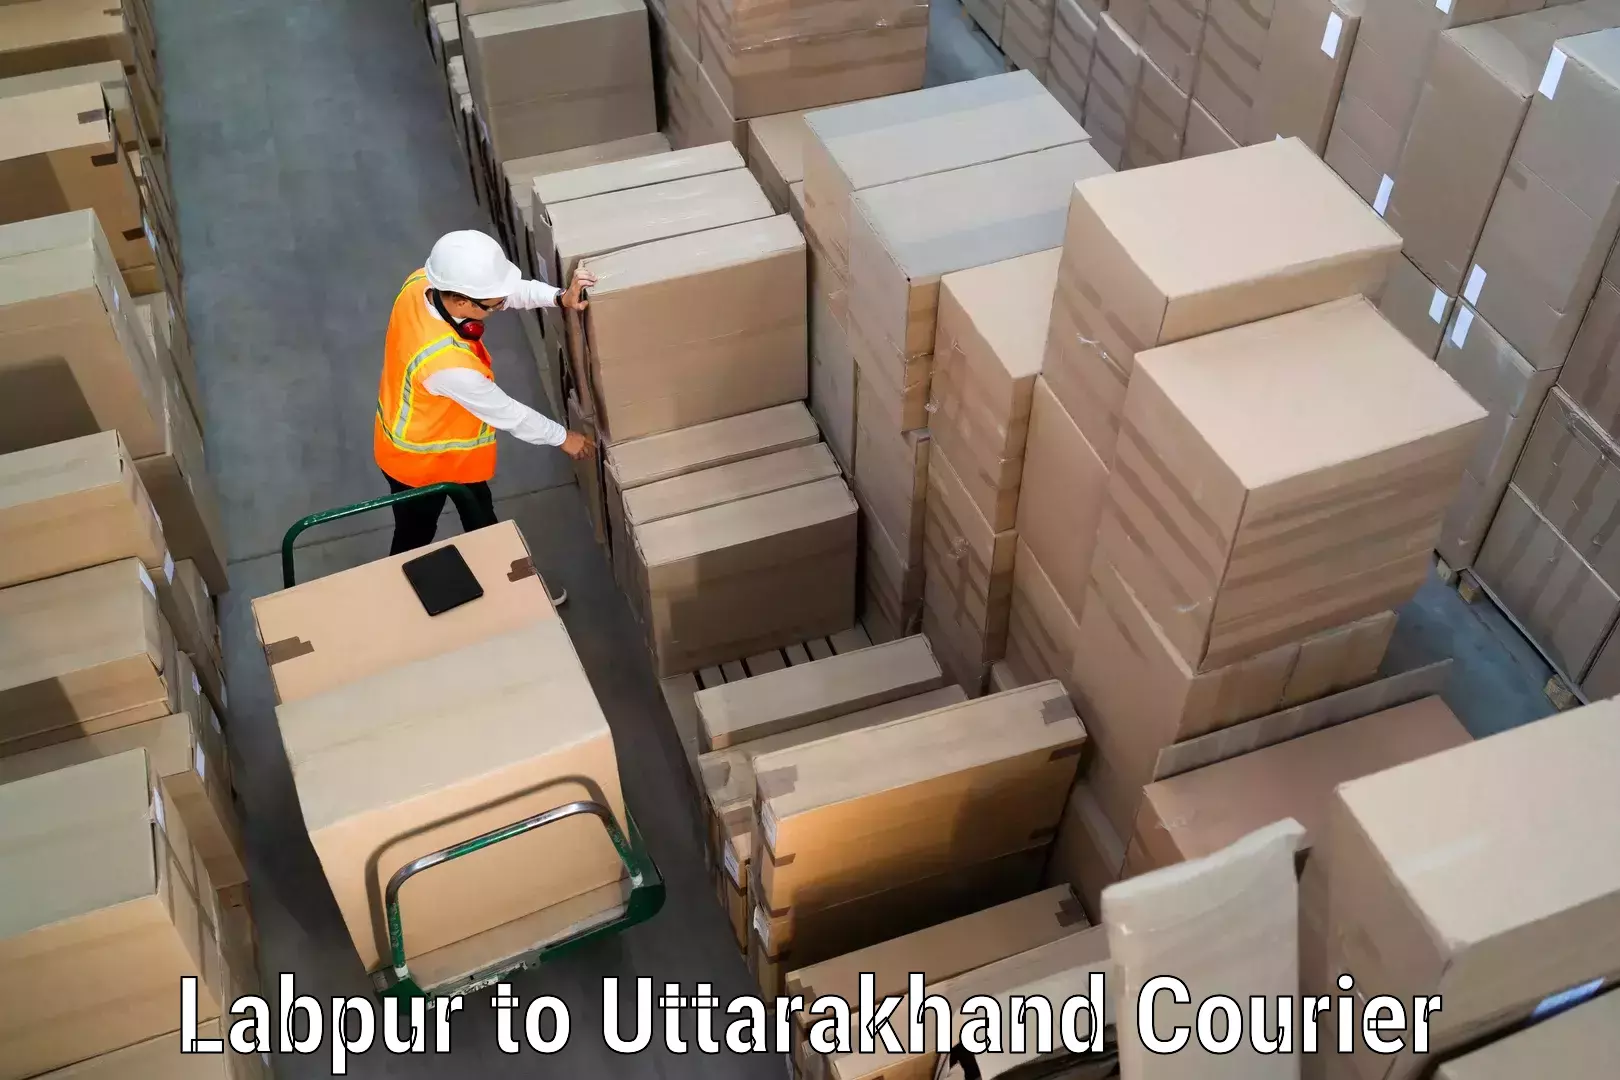 Nationwide courier service Labpur to Dehradun